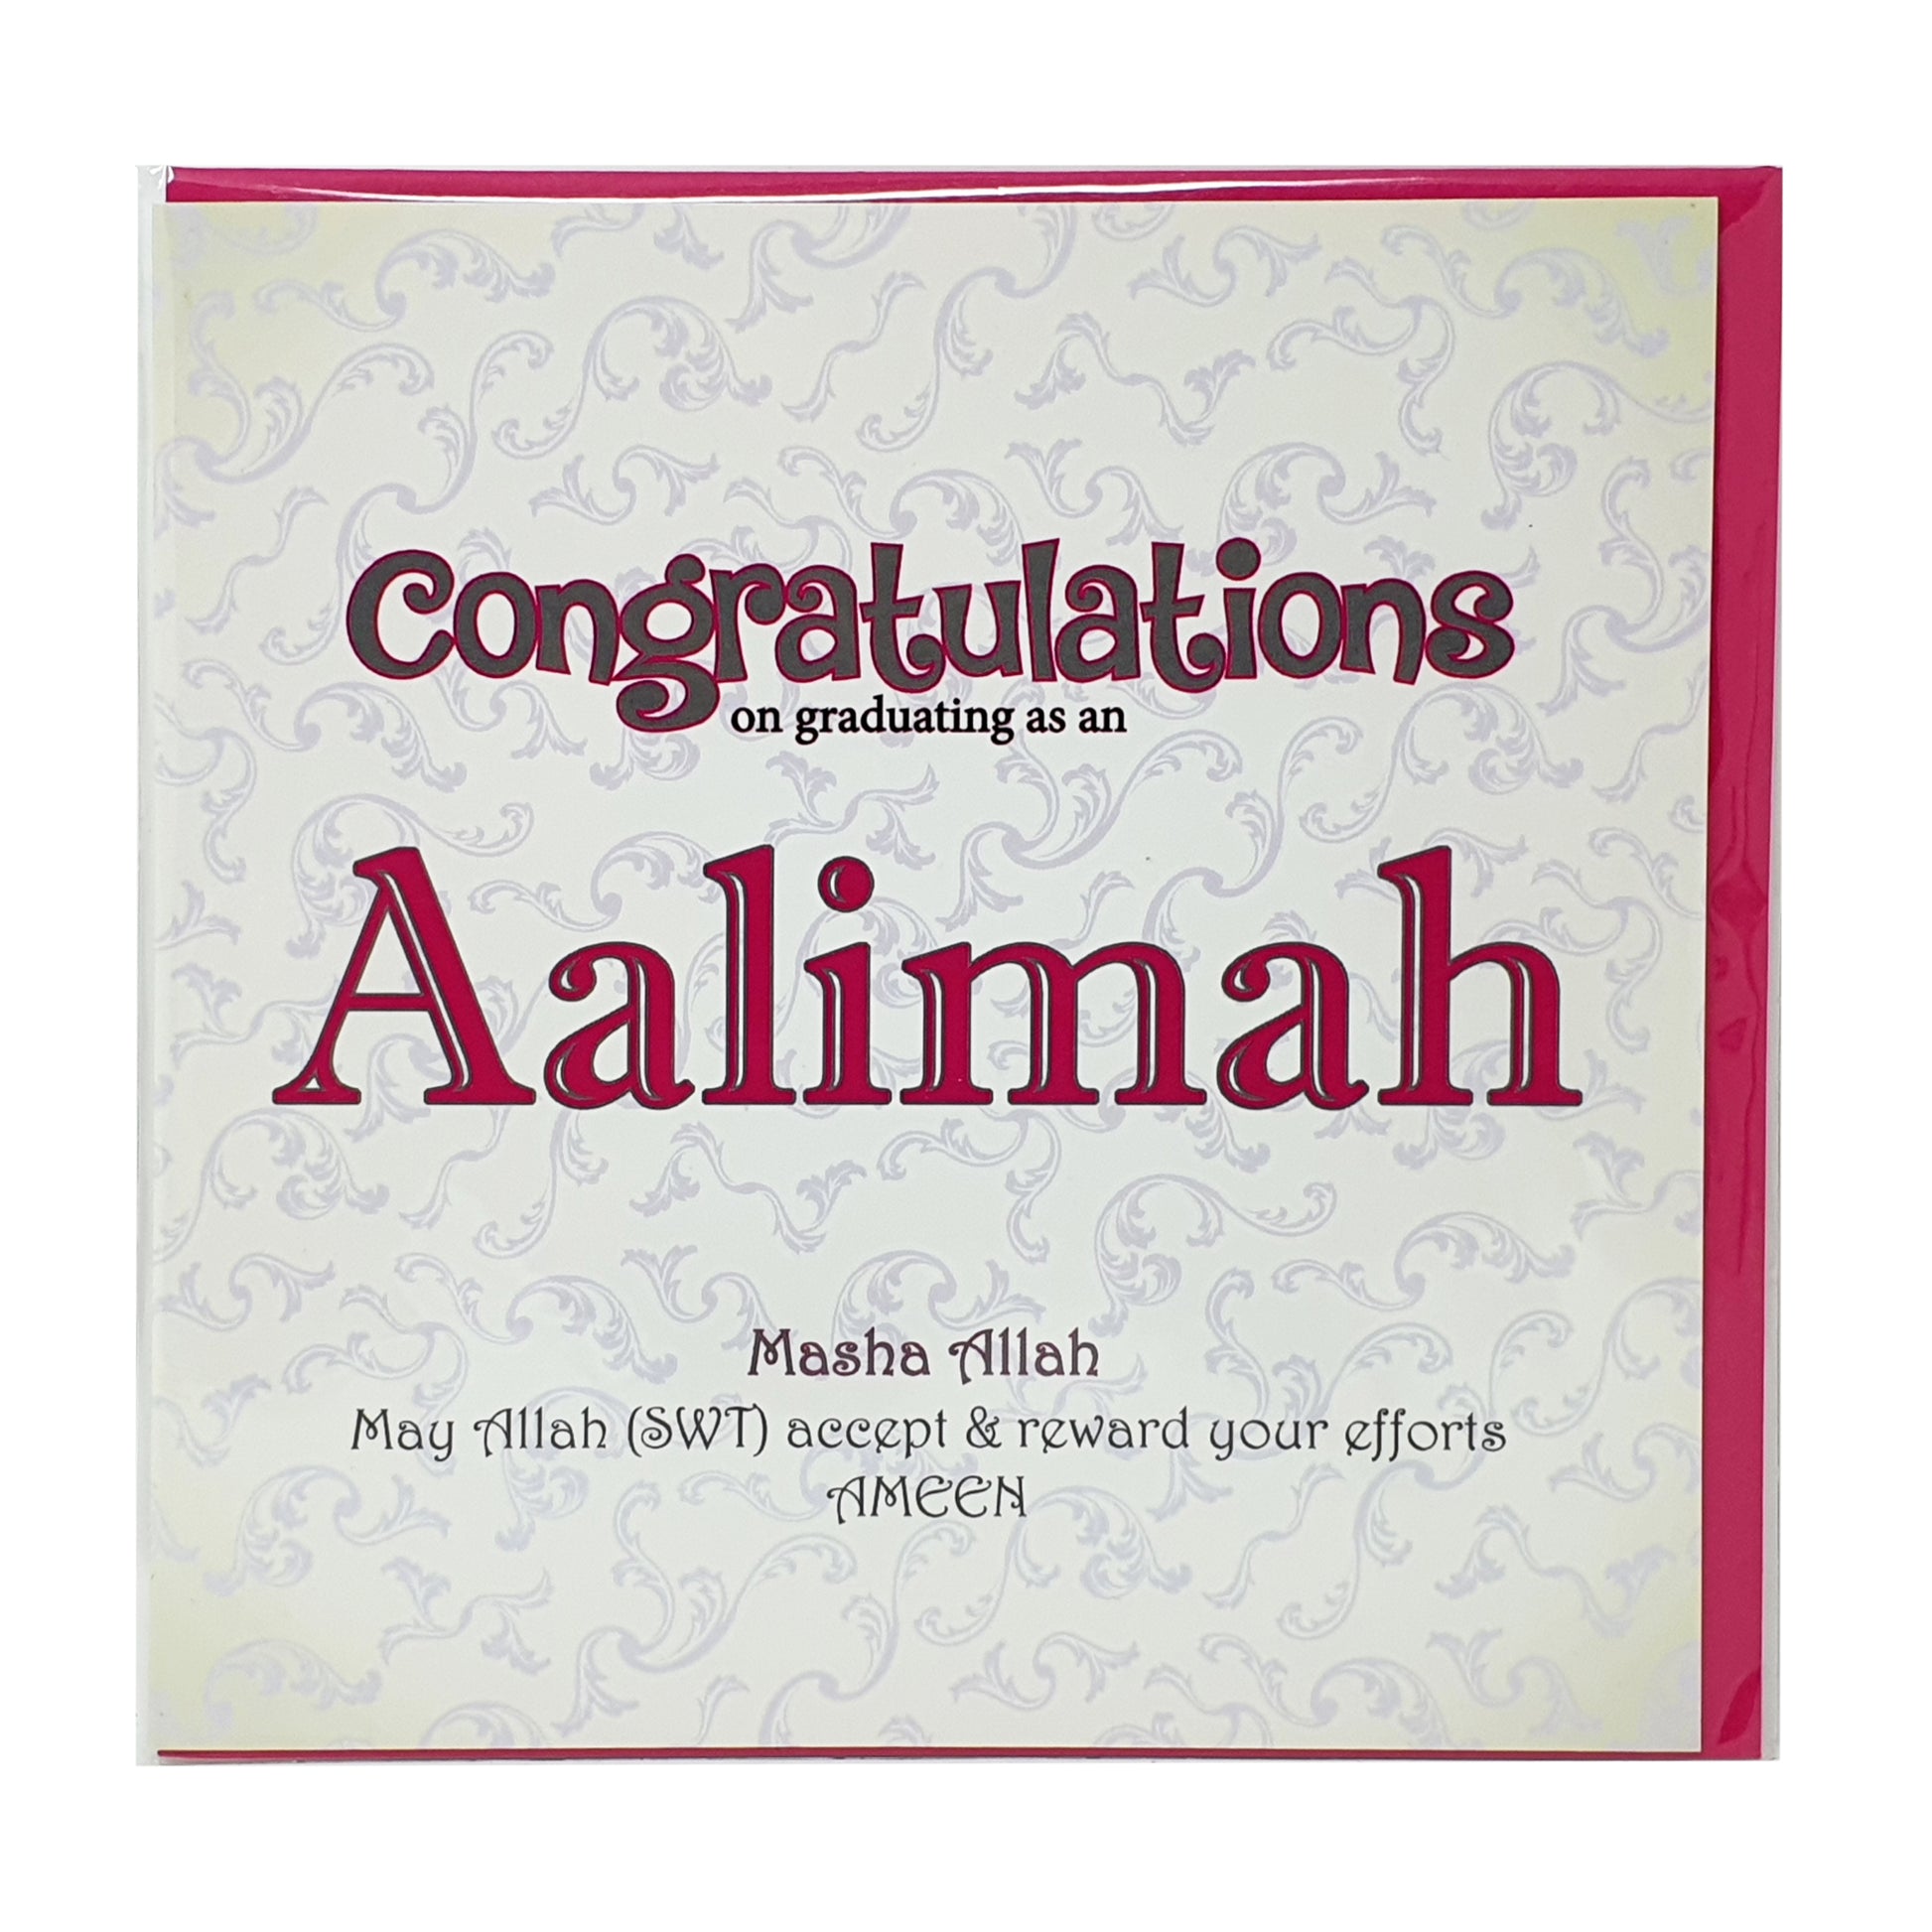 Congratulations Aalimah